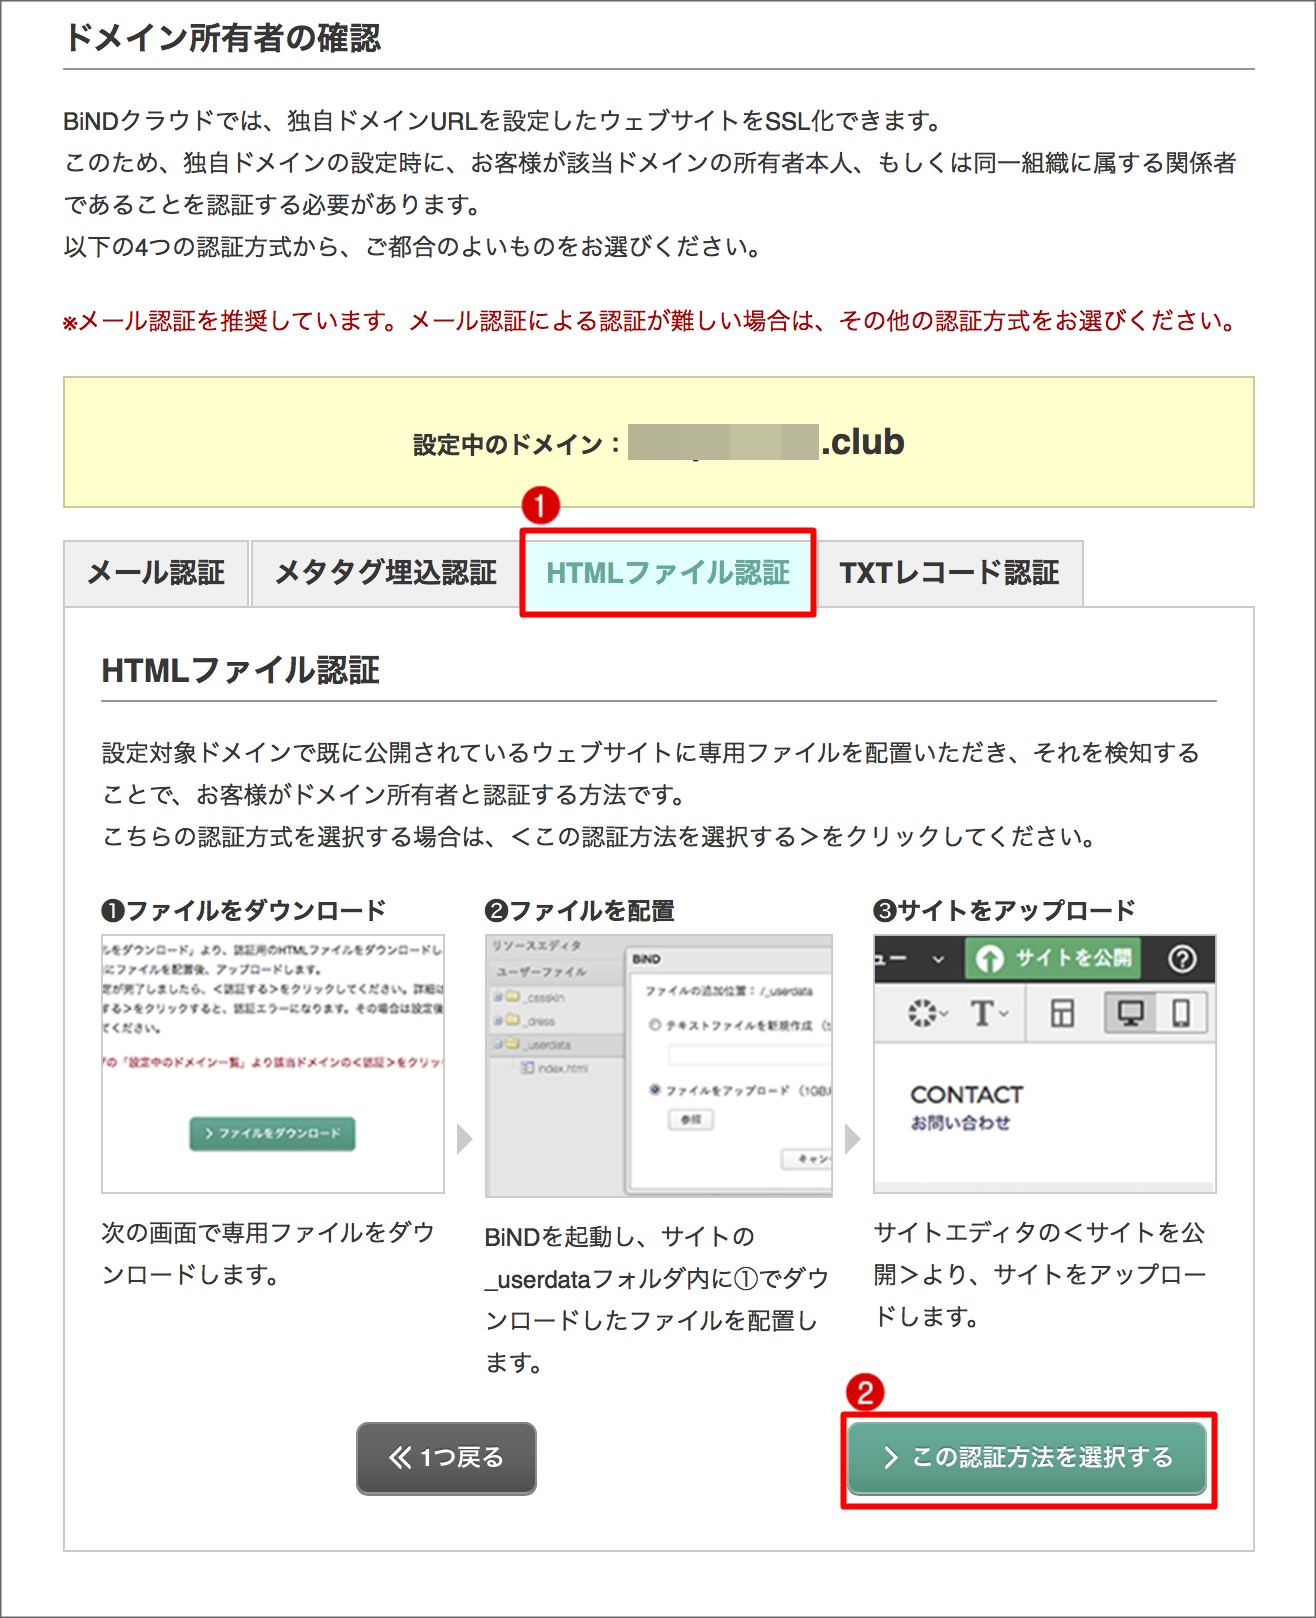 http://www.digitalstage.jp/support/weblife/manual/02-05-15_001.jpg